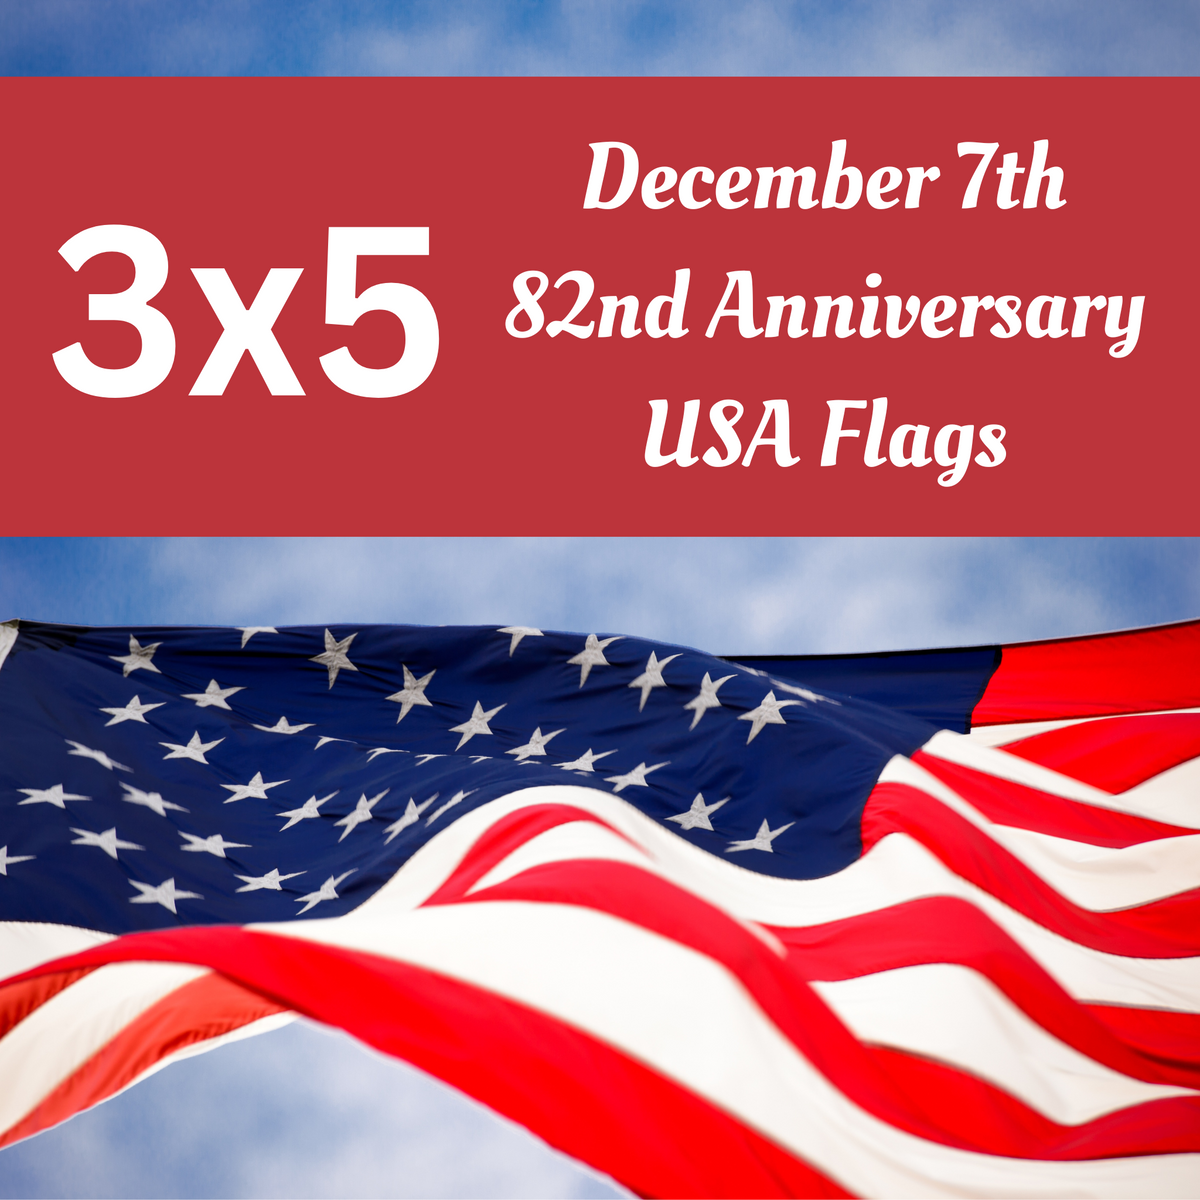 3x5 December 7th USA Flag Flown On USS Arizona Memorial At Pearl Harbo